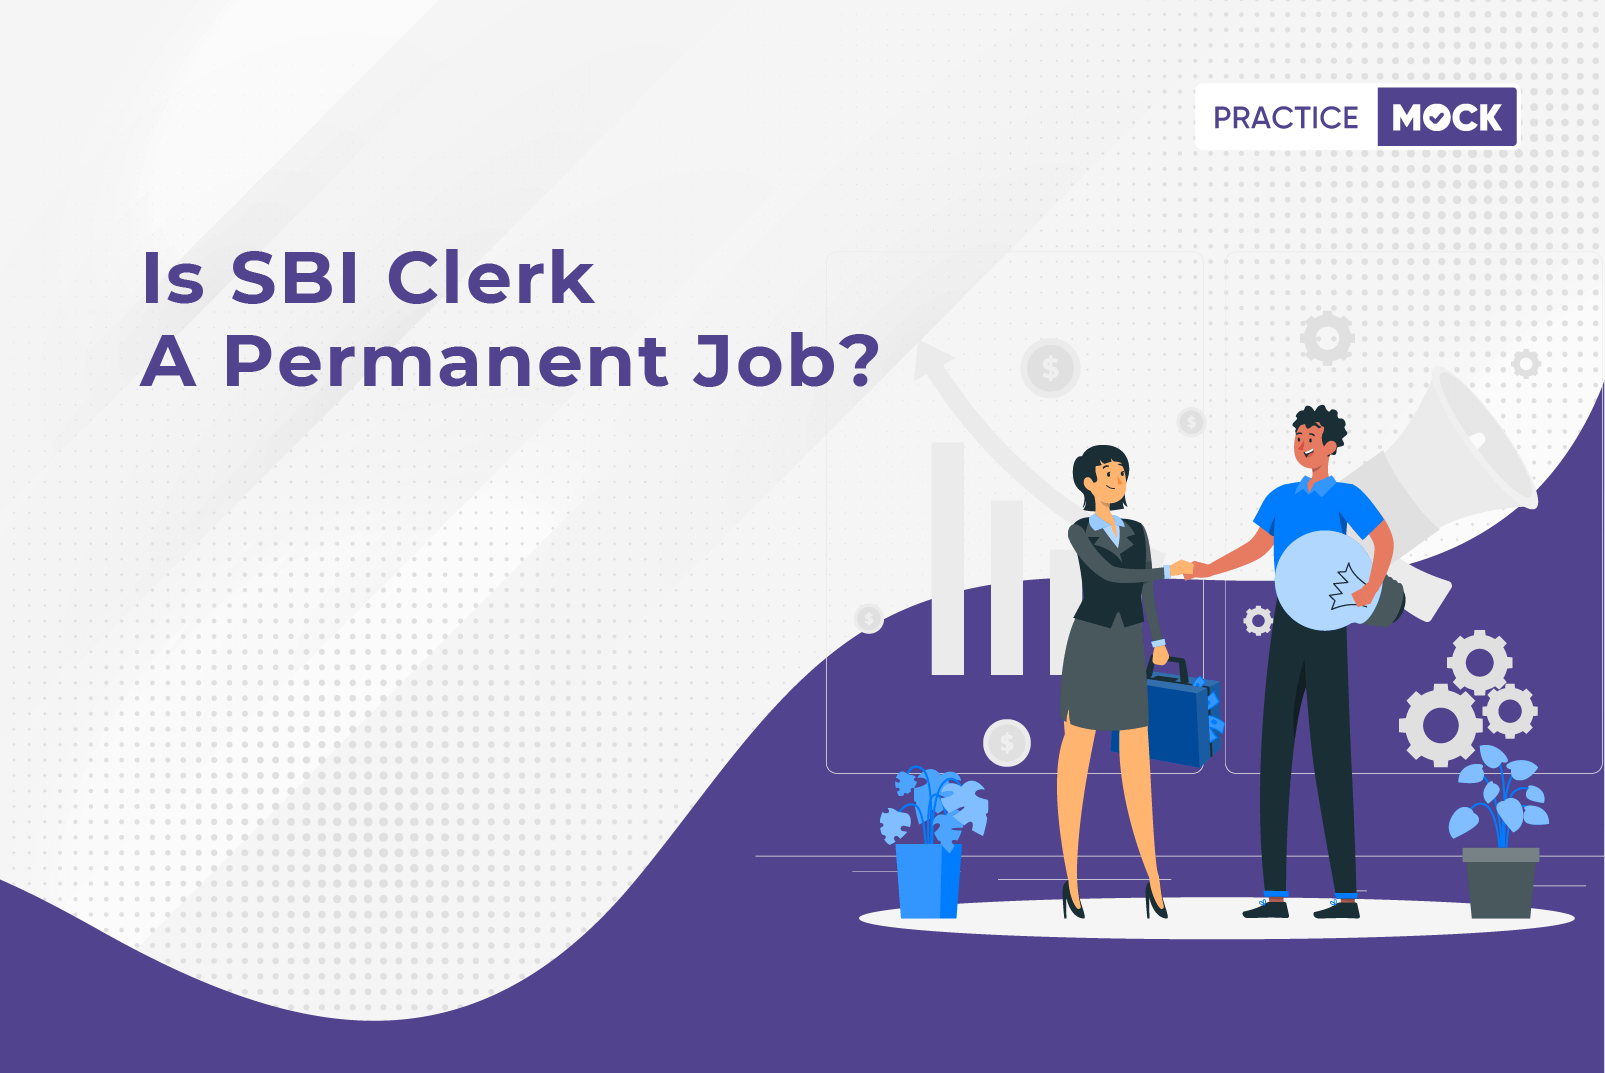 Is SBI clerk a permanent job?